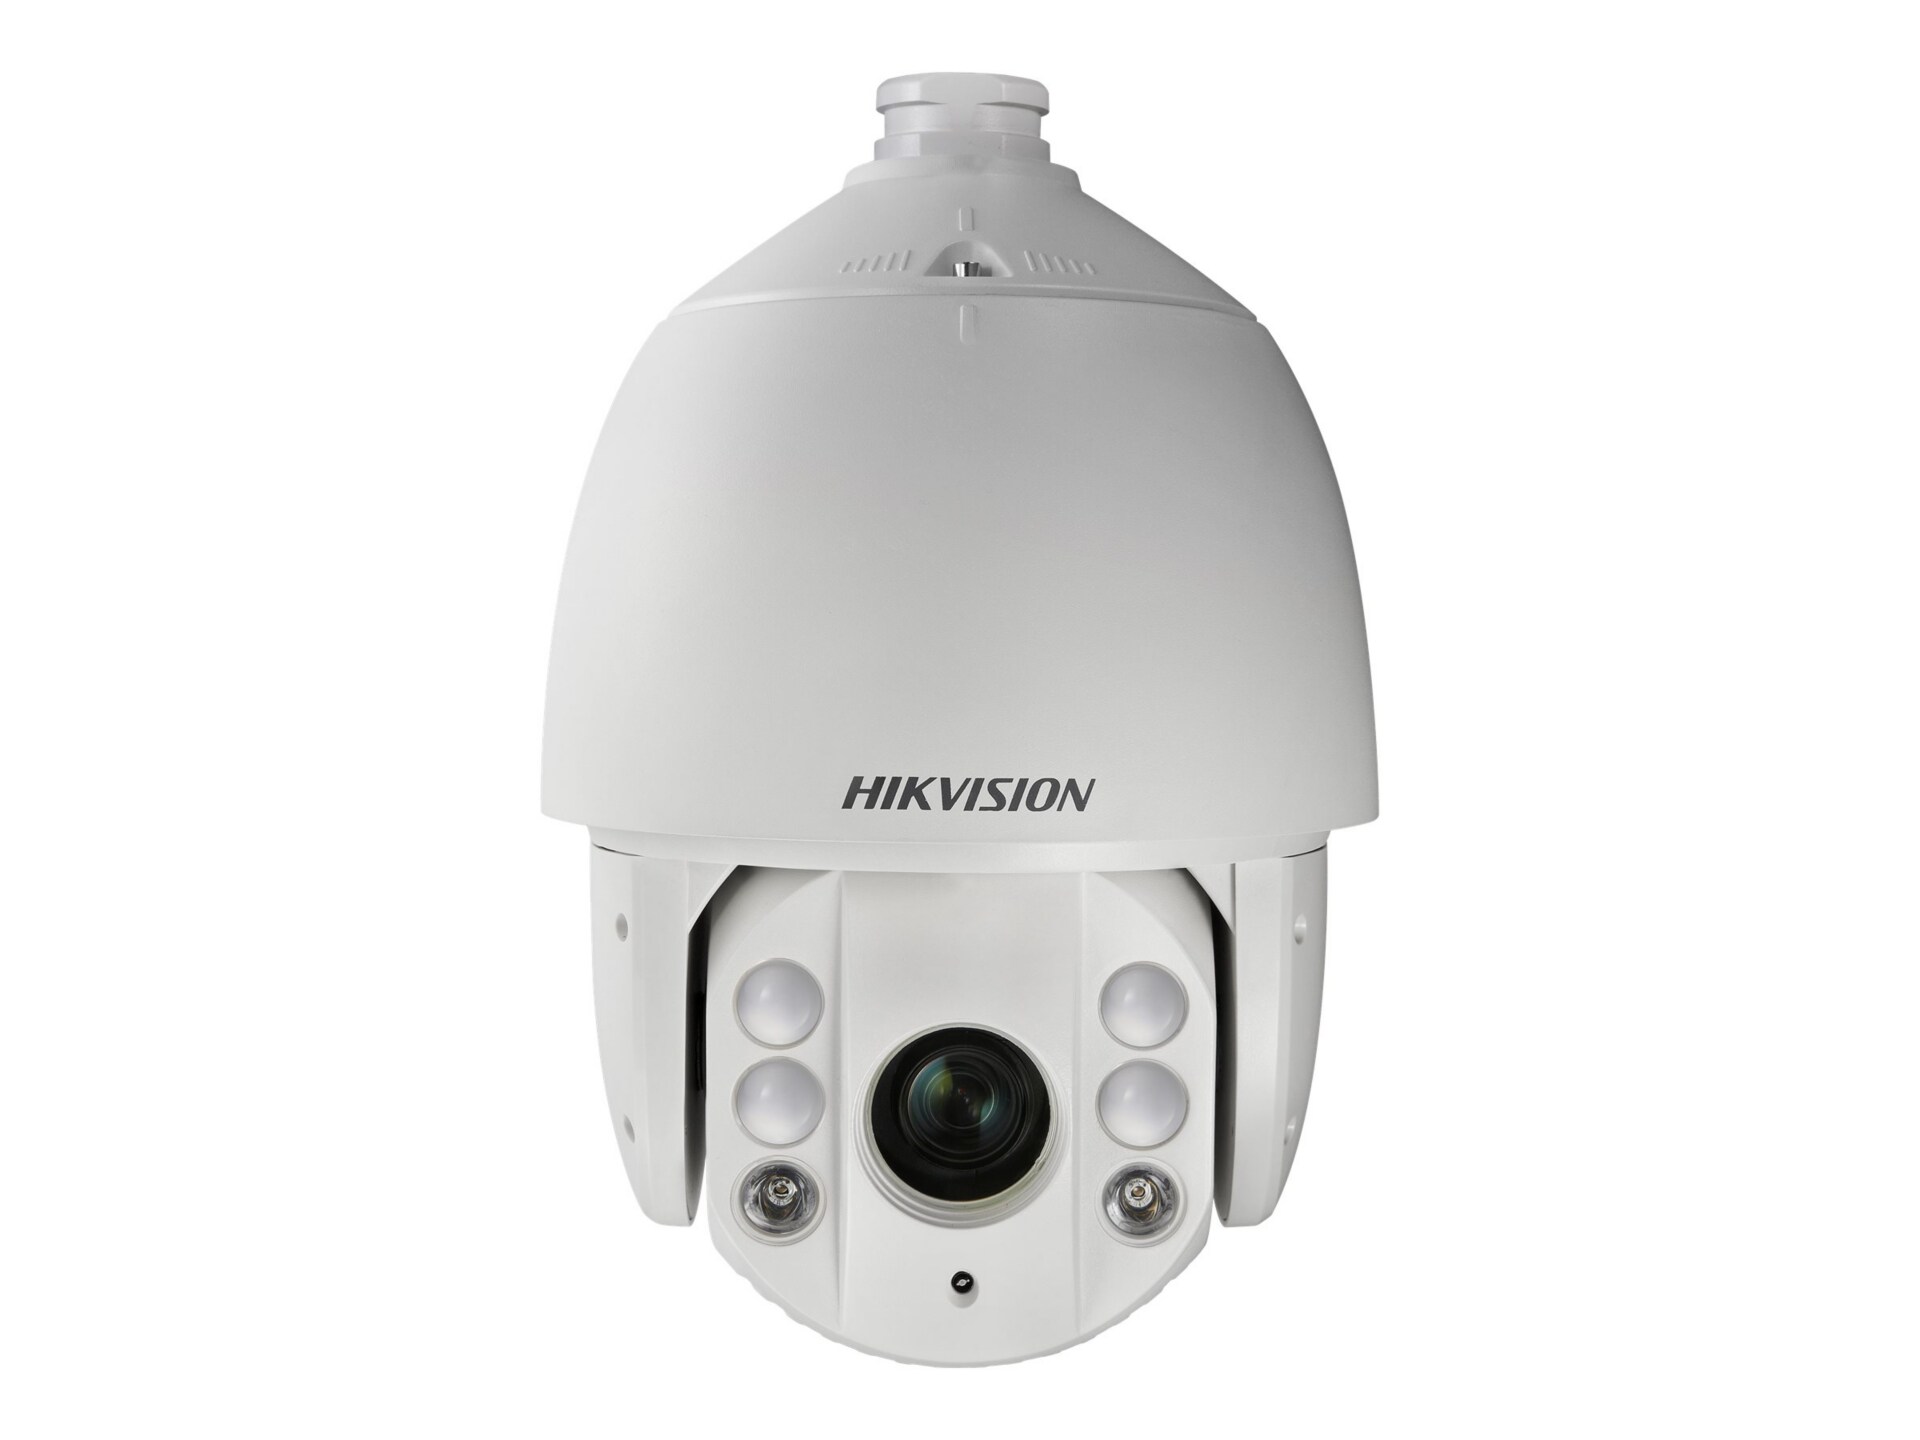 Hikvision DS-2DE7232IW-AE - network surveillance camera